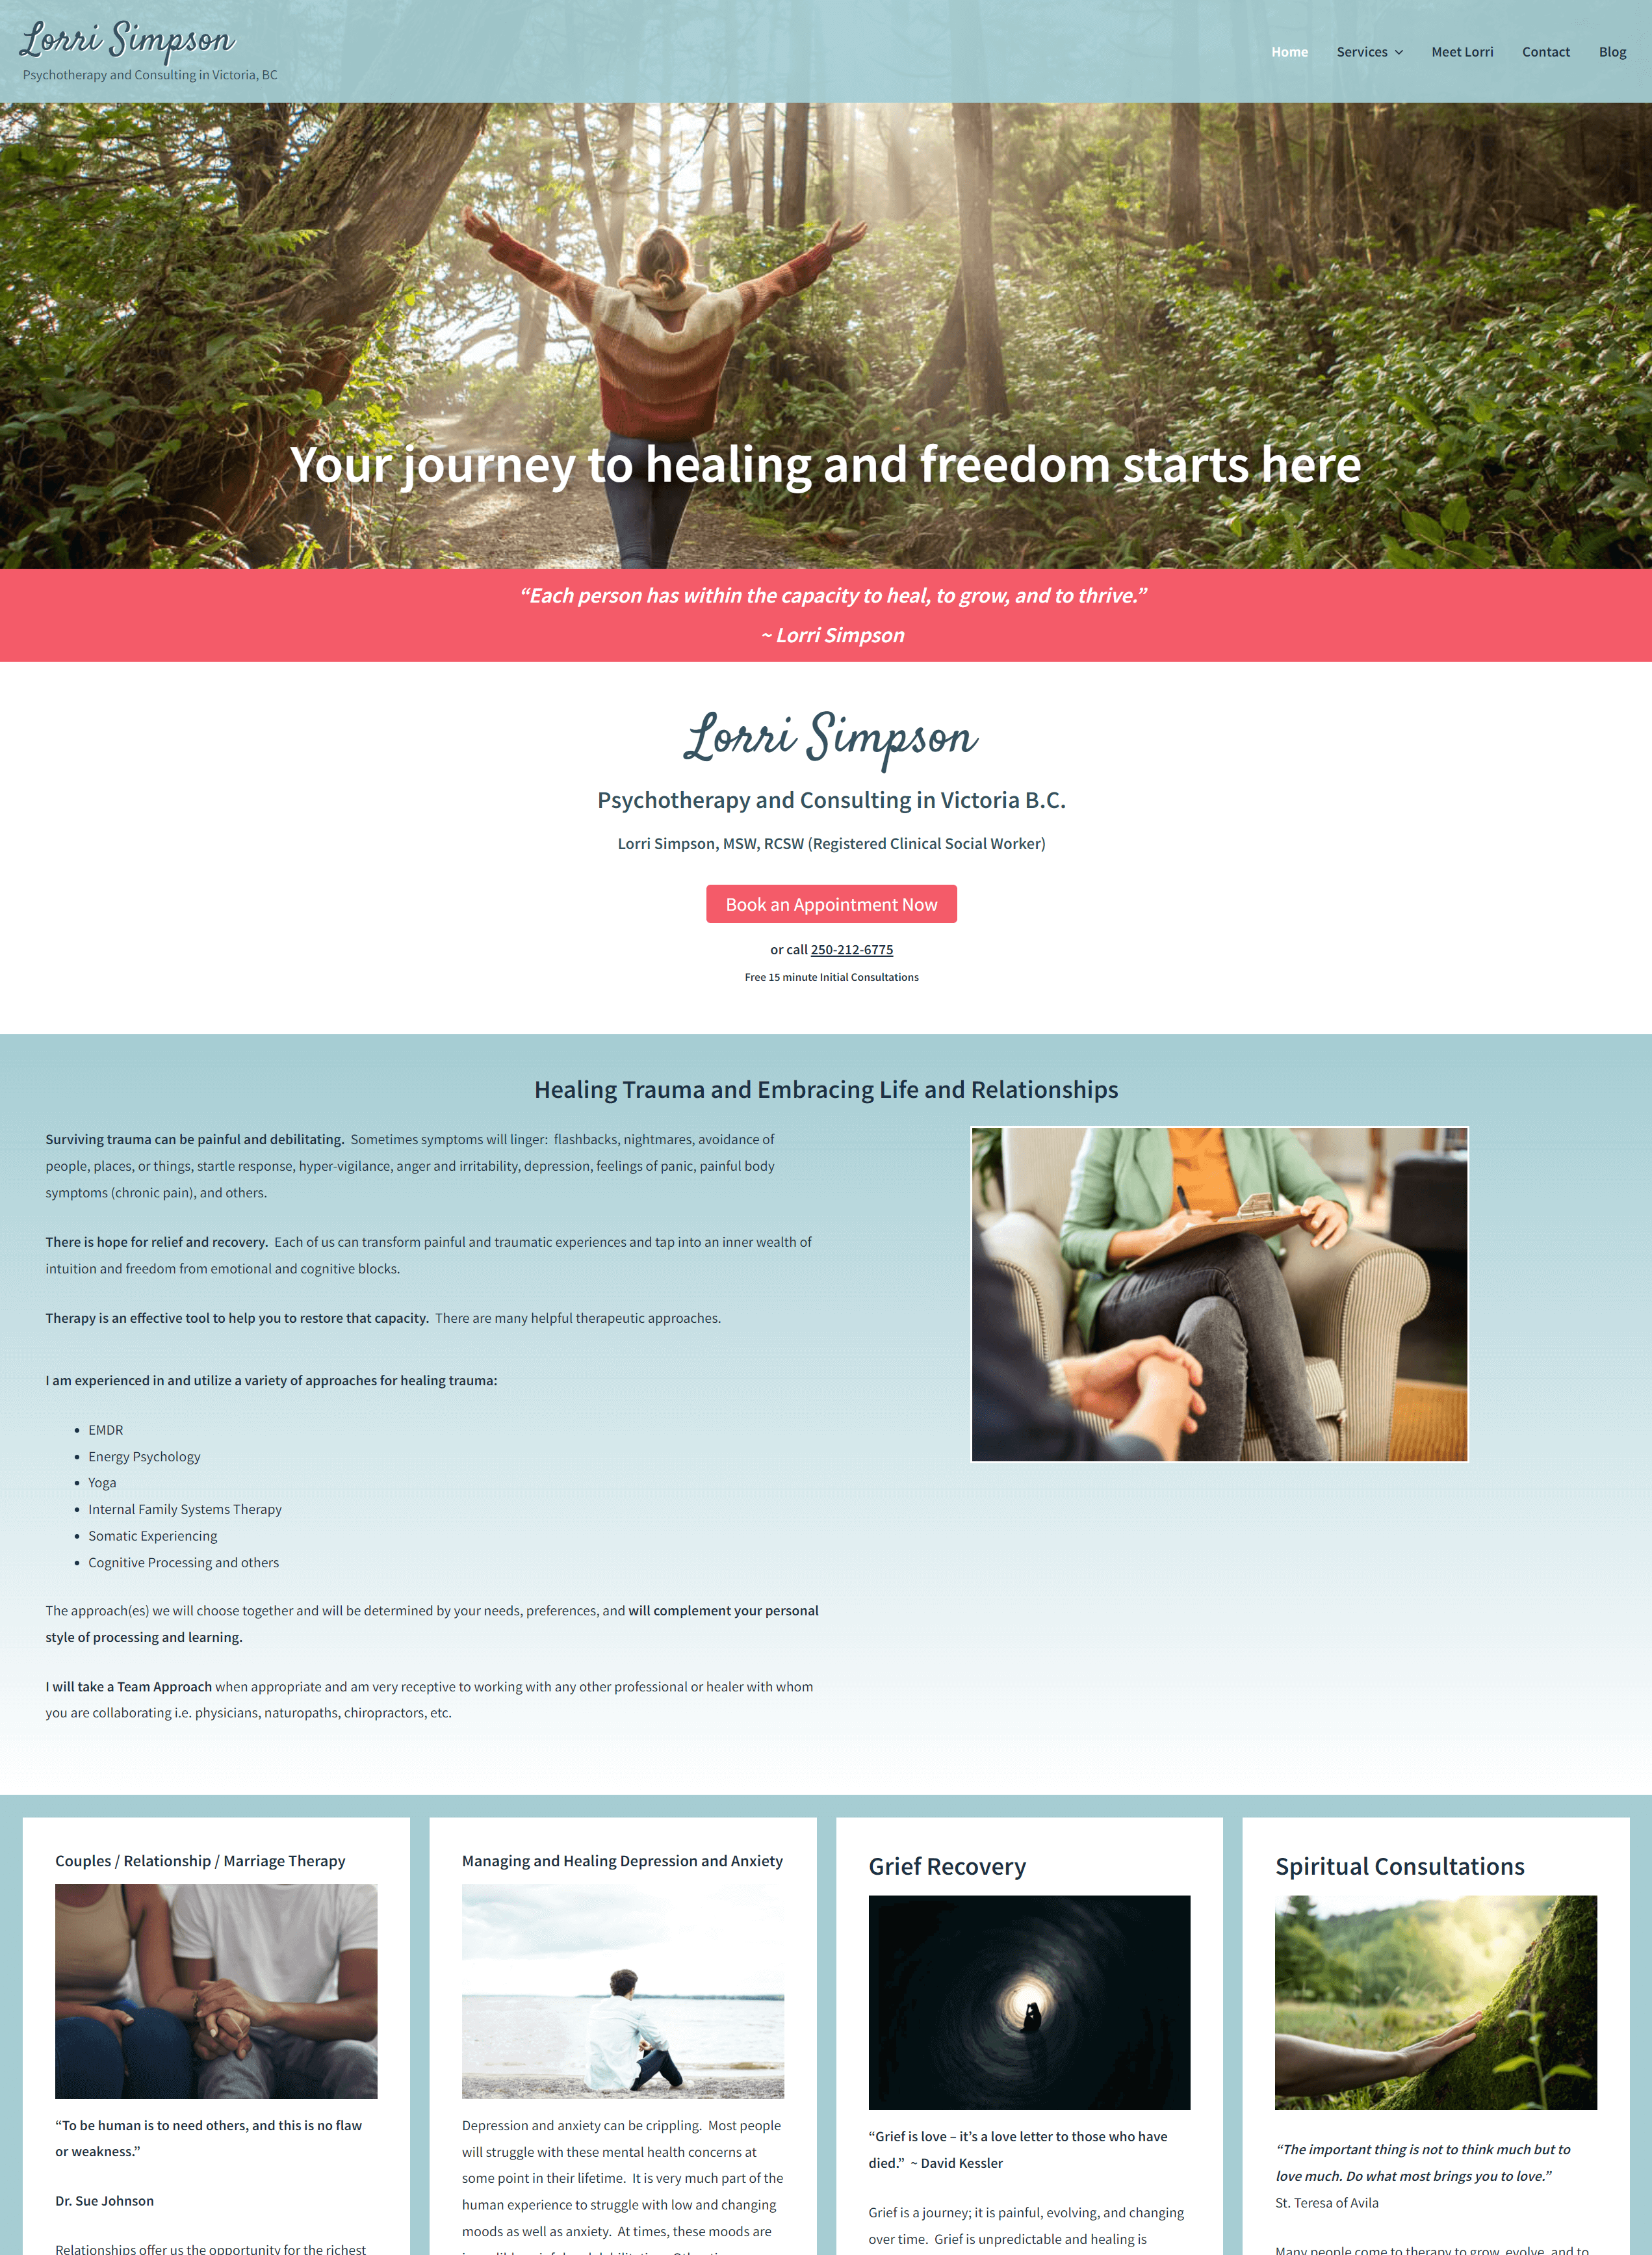 New WordPress Website Design for Lorri Simpson